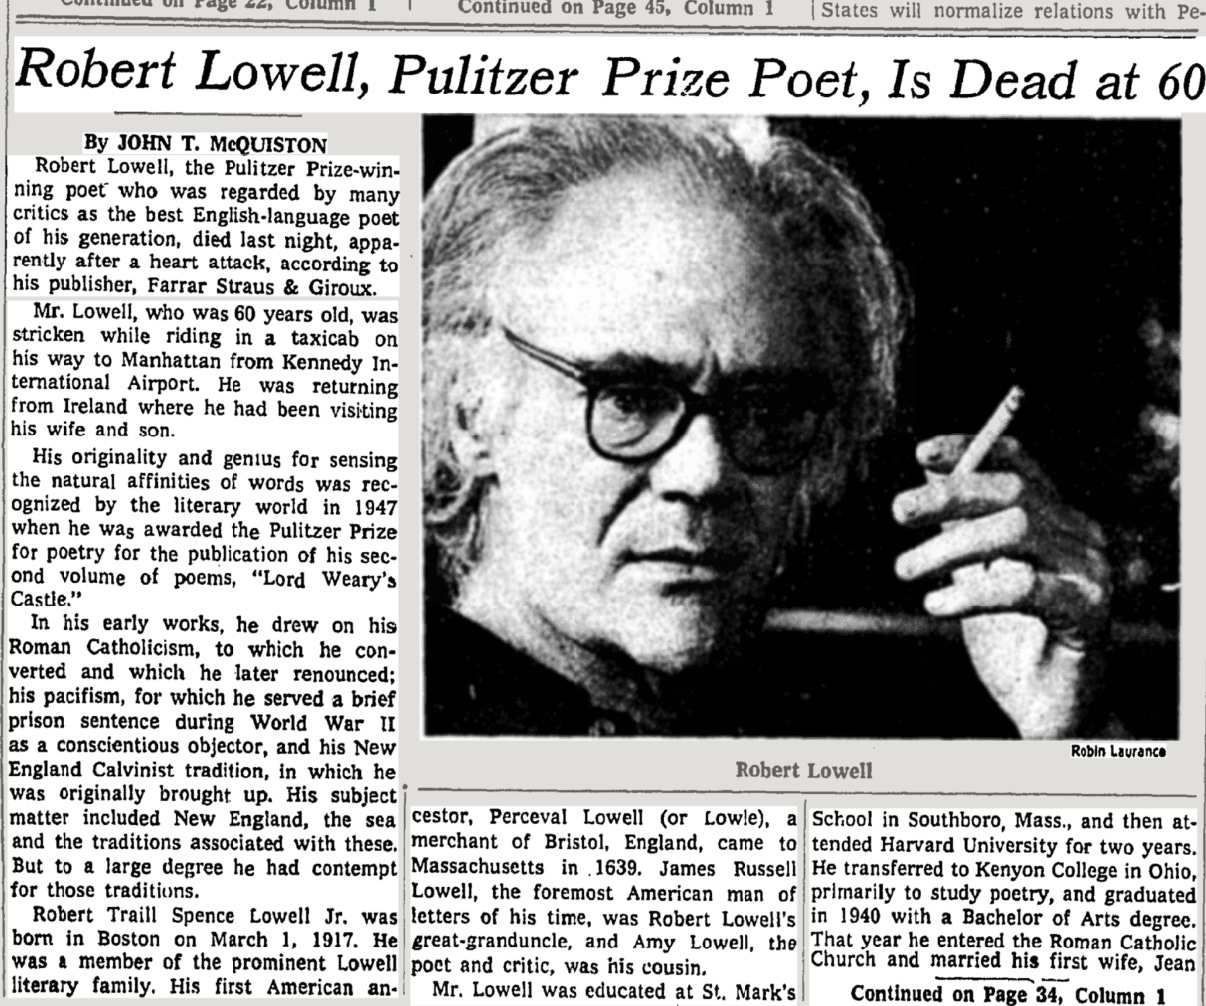 Robert Lowell Obituary: "Robert Lowell, Pulitzer Prize Poet, Dead at 60"